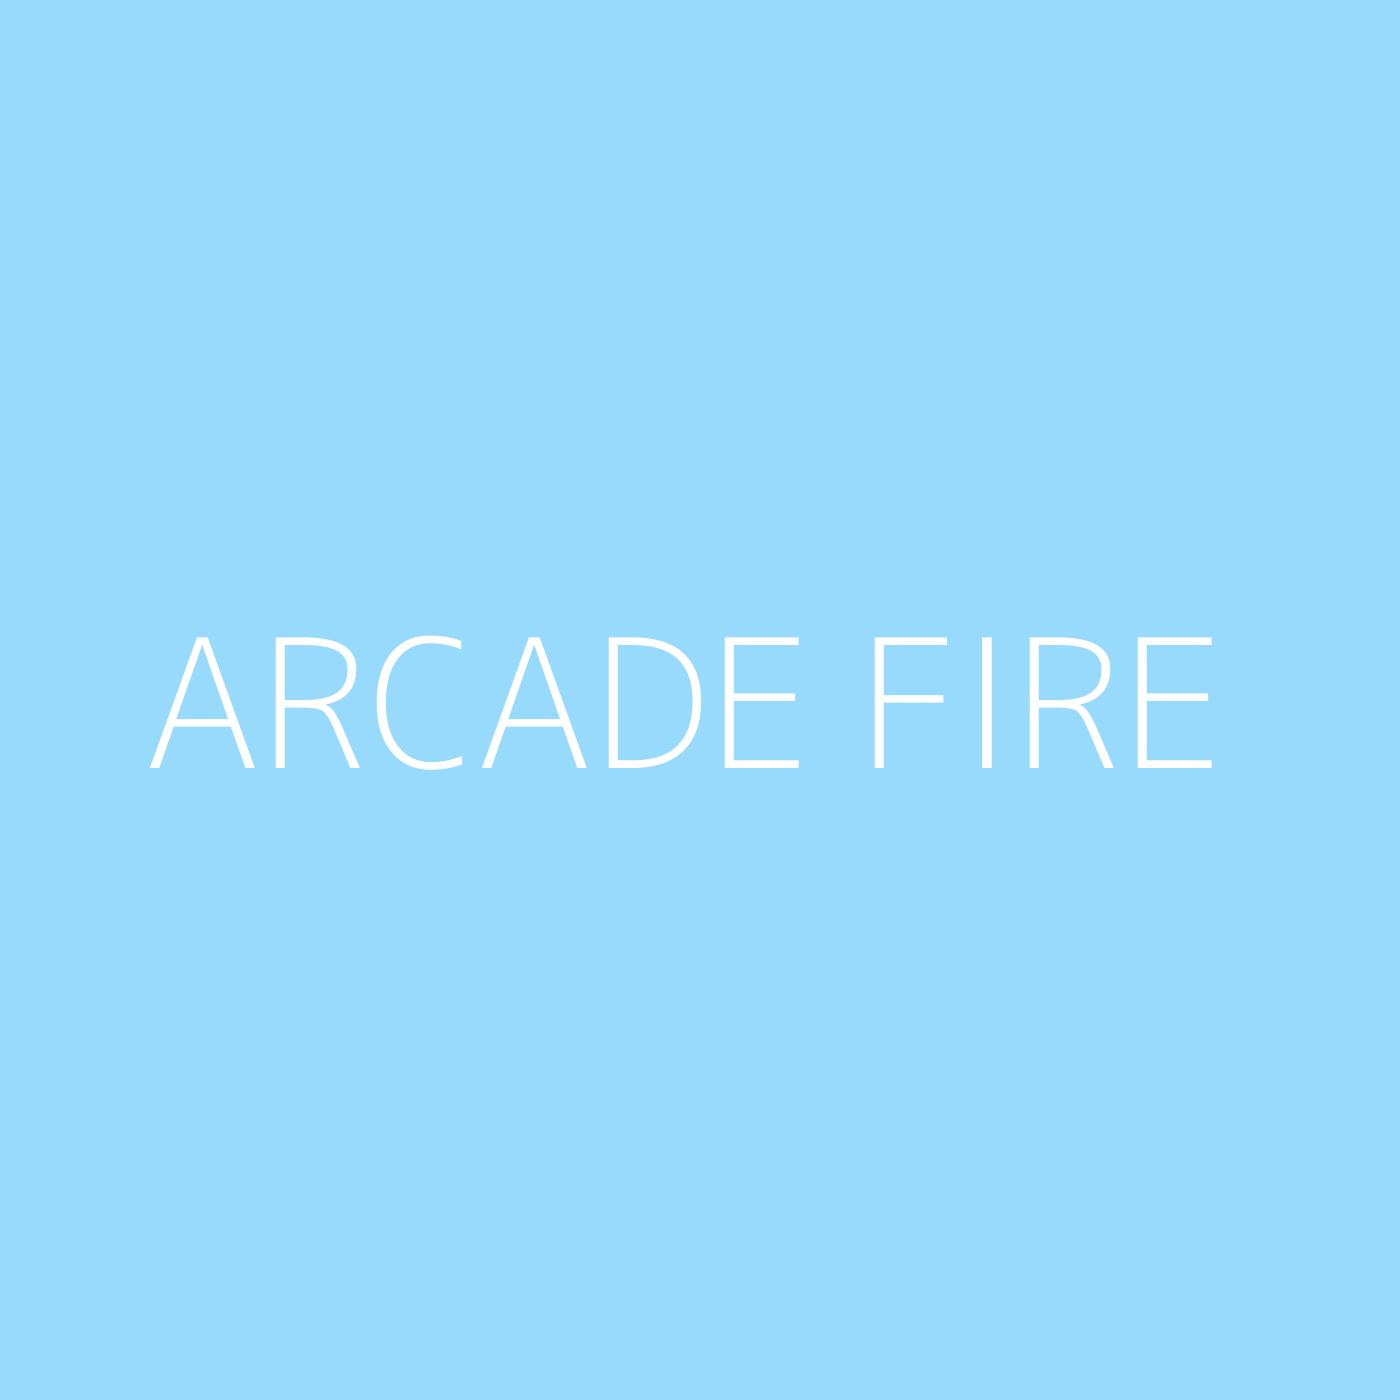 Arcade Fire Playlist Artwork